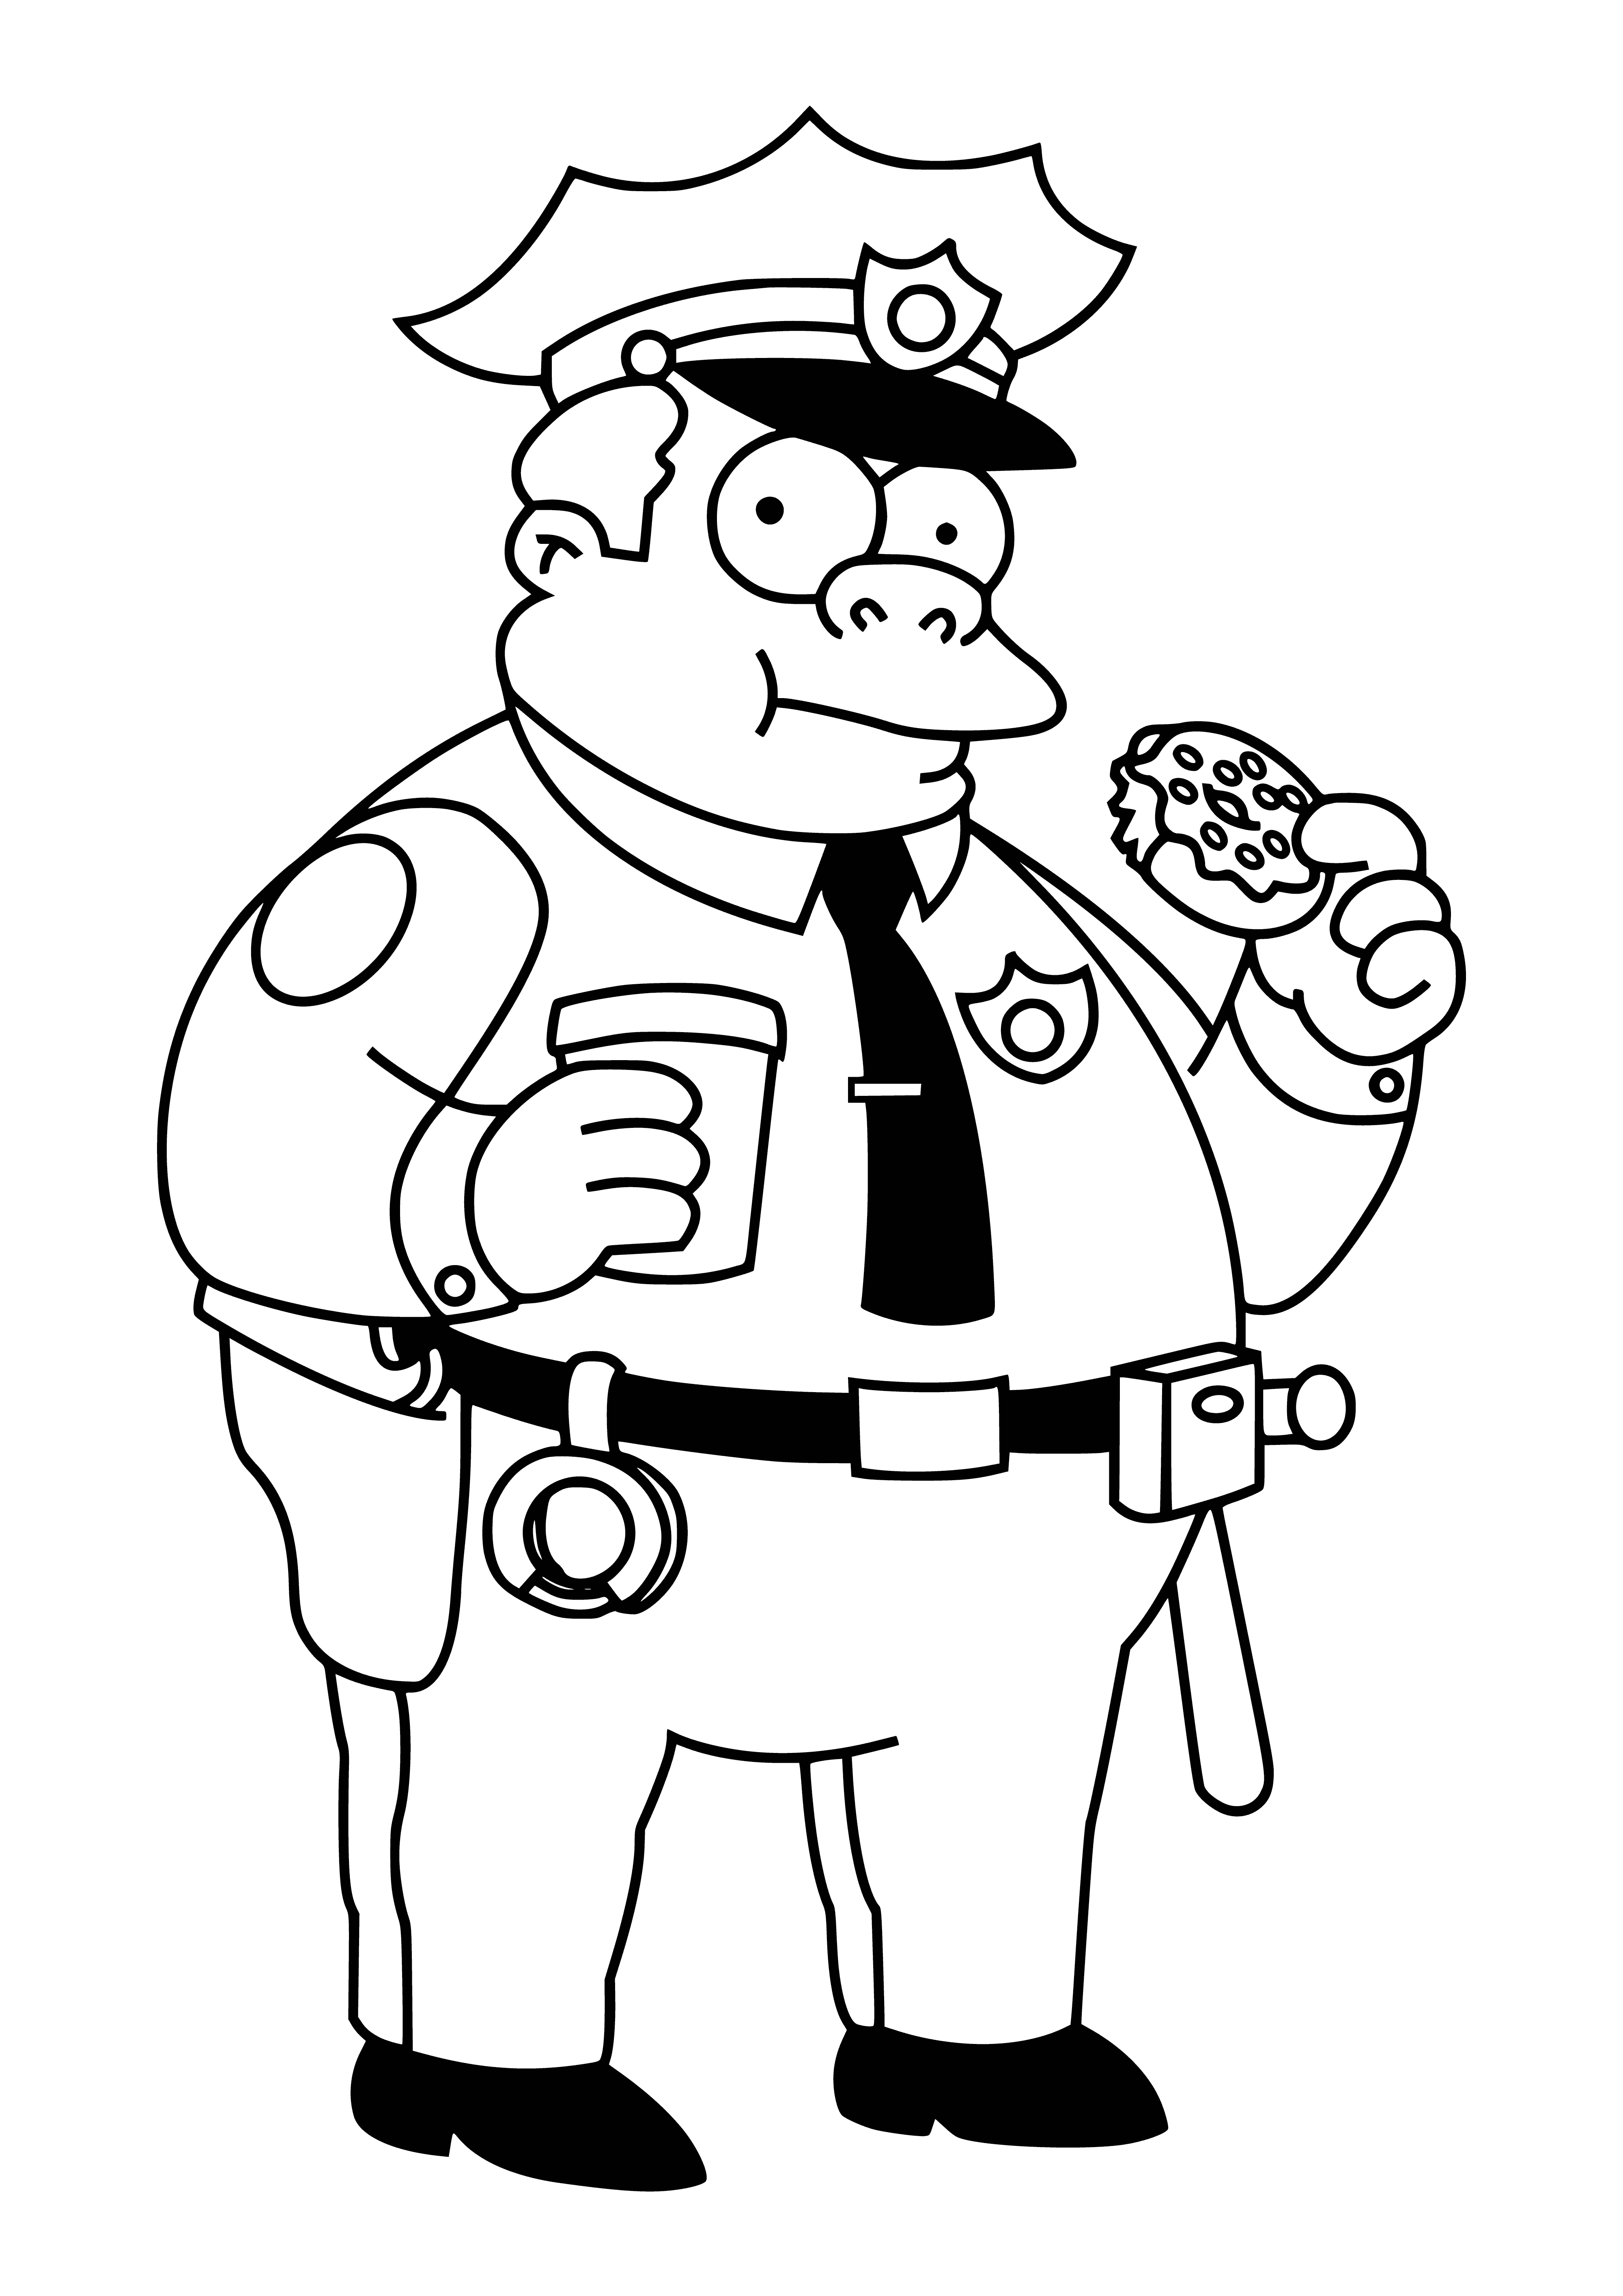 Police Chief Clancy Wiggum coloring page